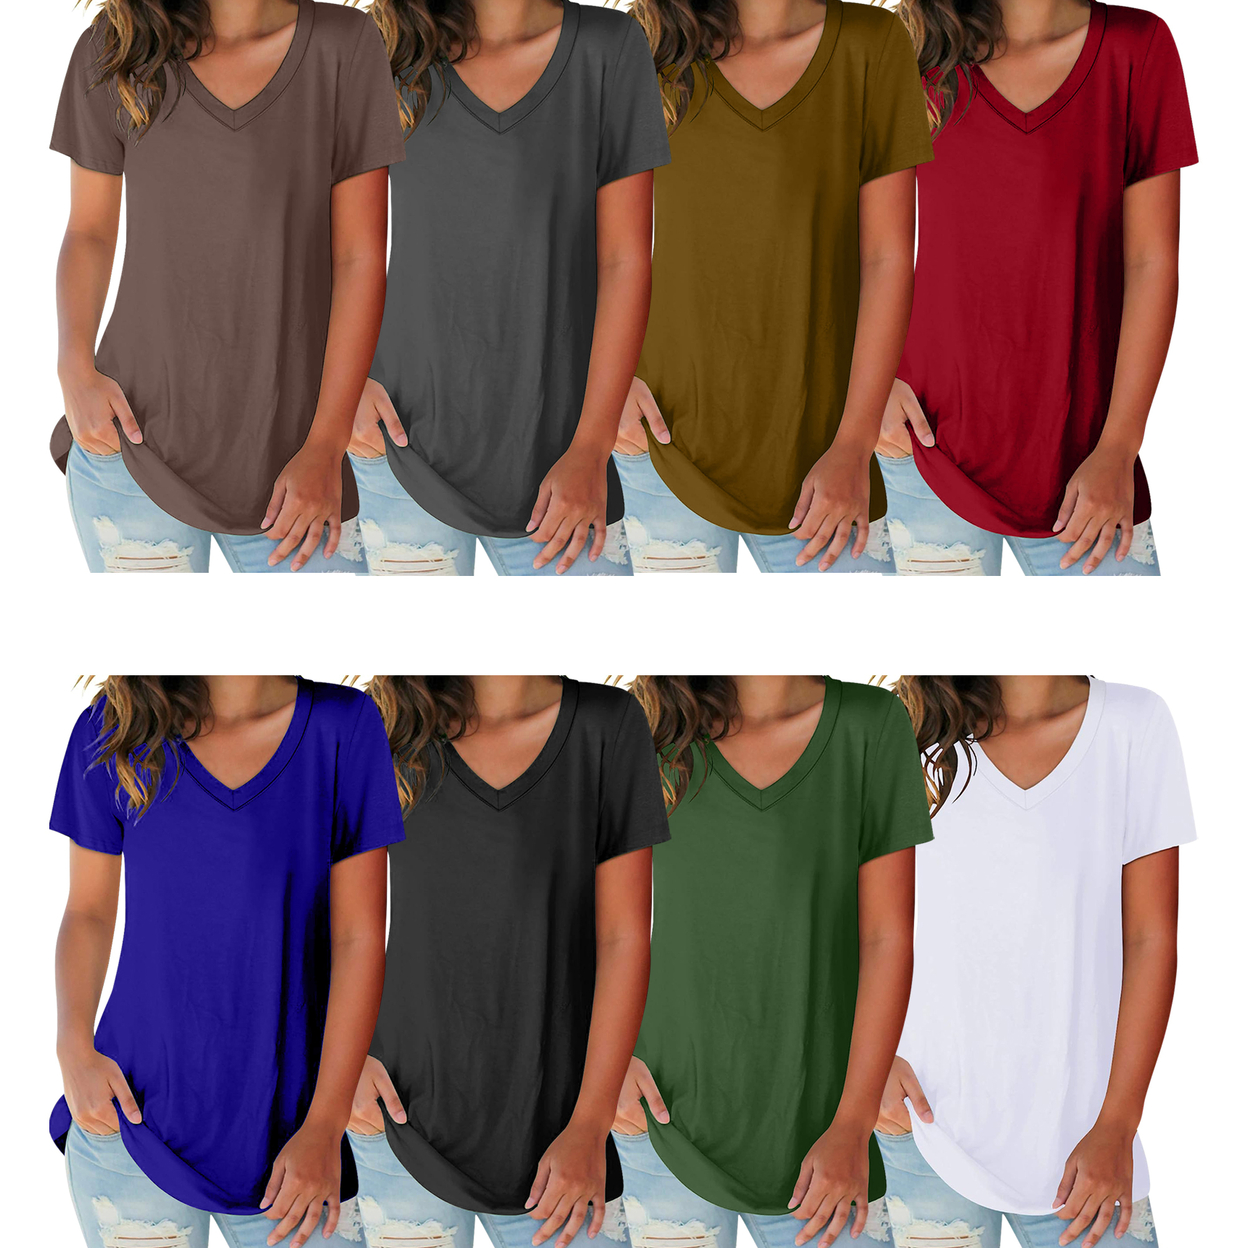 2-Pack: Women's Ultra Soft Smooth Cotton Blend Basic V-Neck Short Sleeve Shirts - Black & Grey, X-large